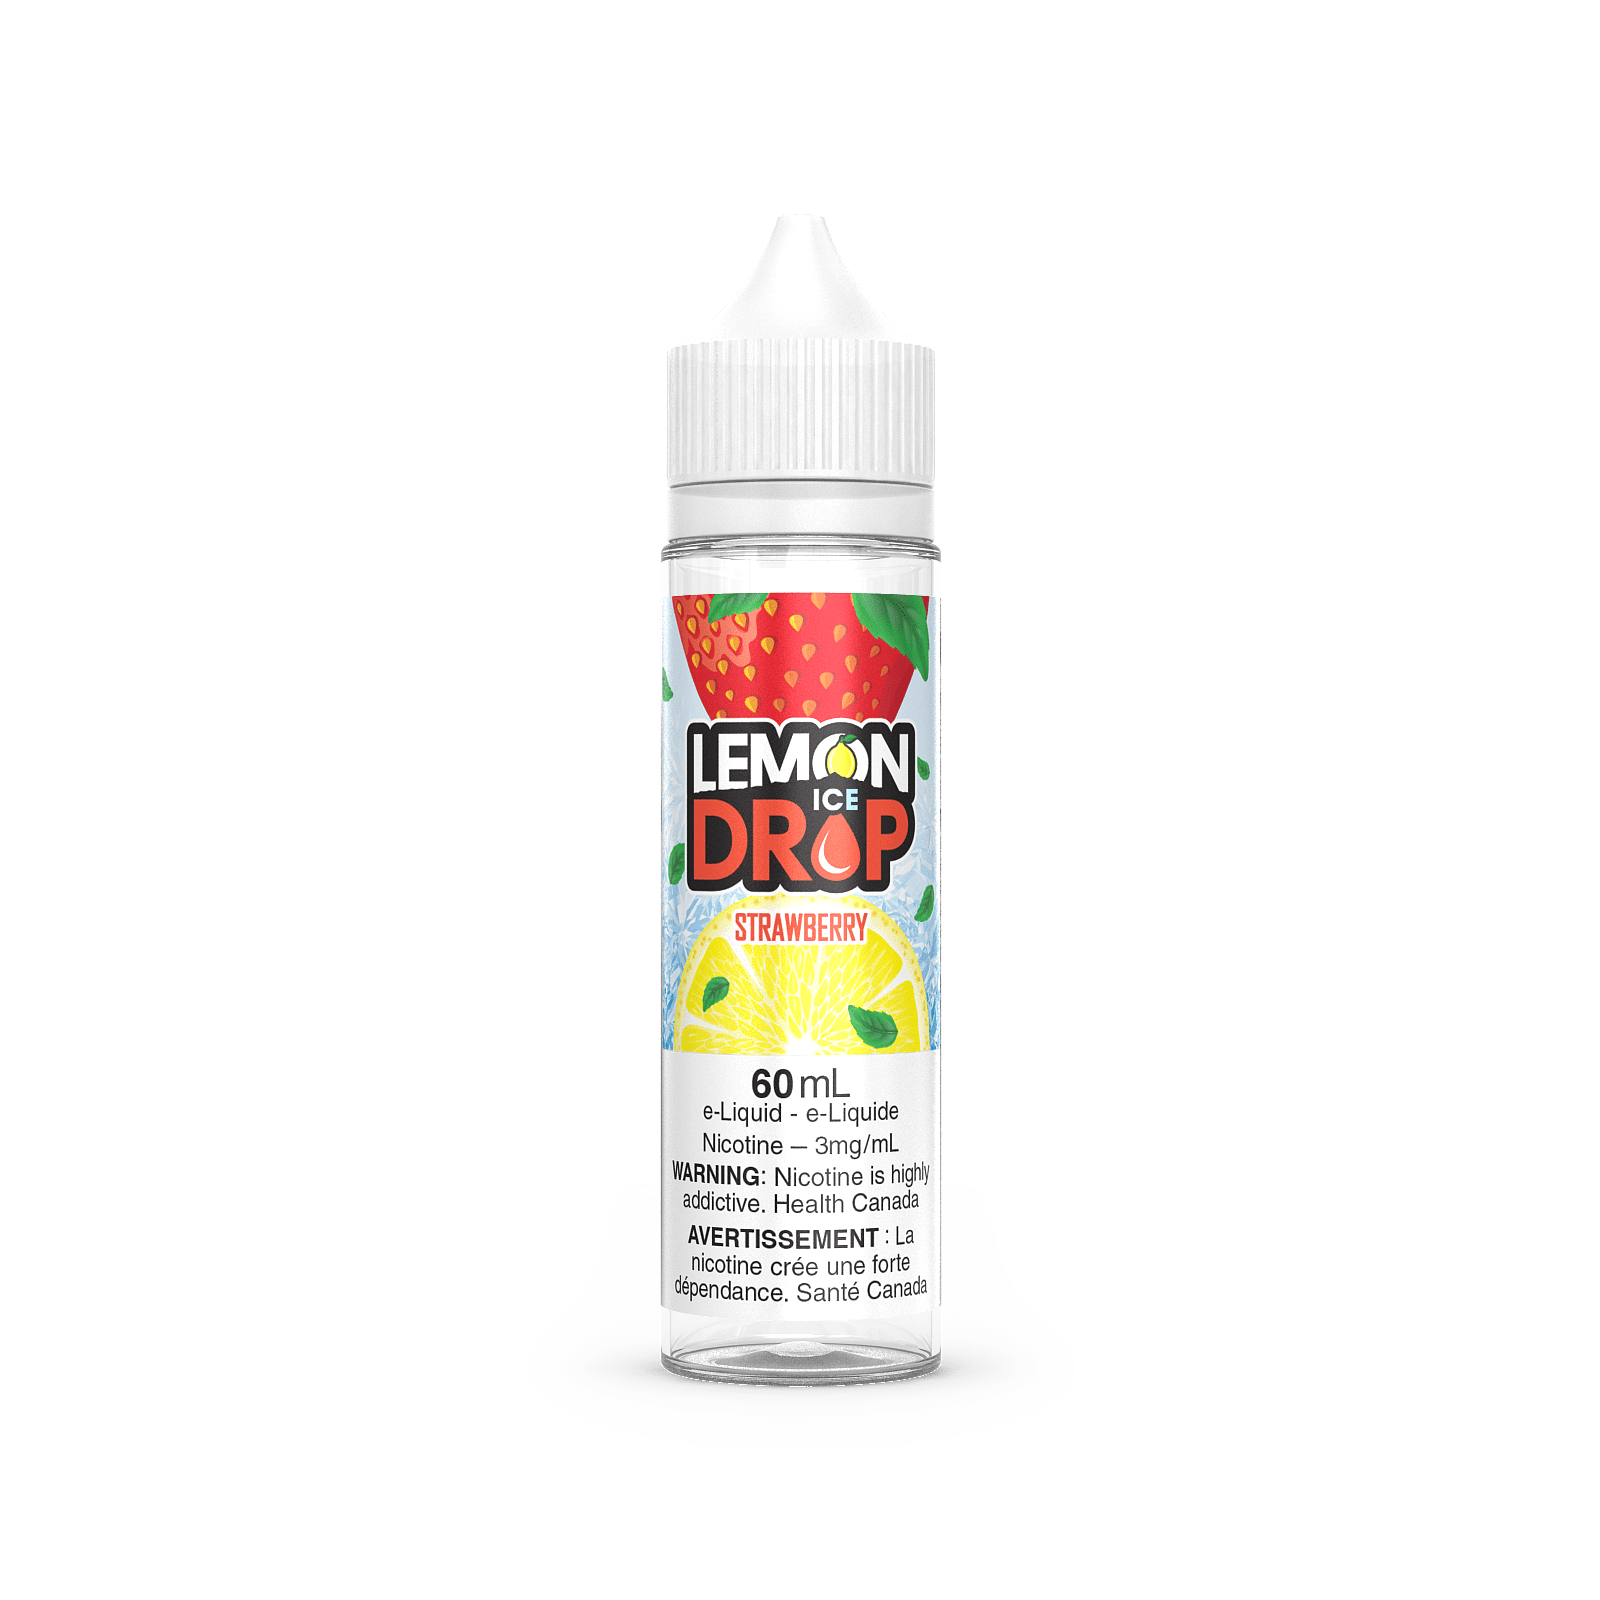 Lemon Drop Ice - Strawberry available on Canada online vape shop